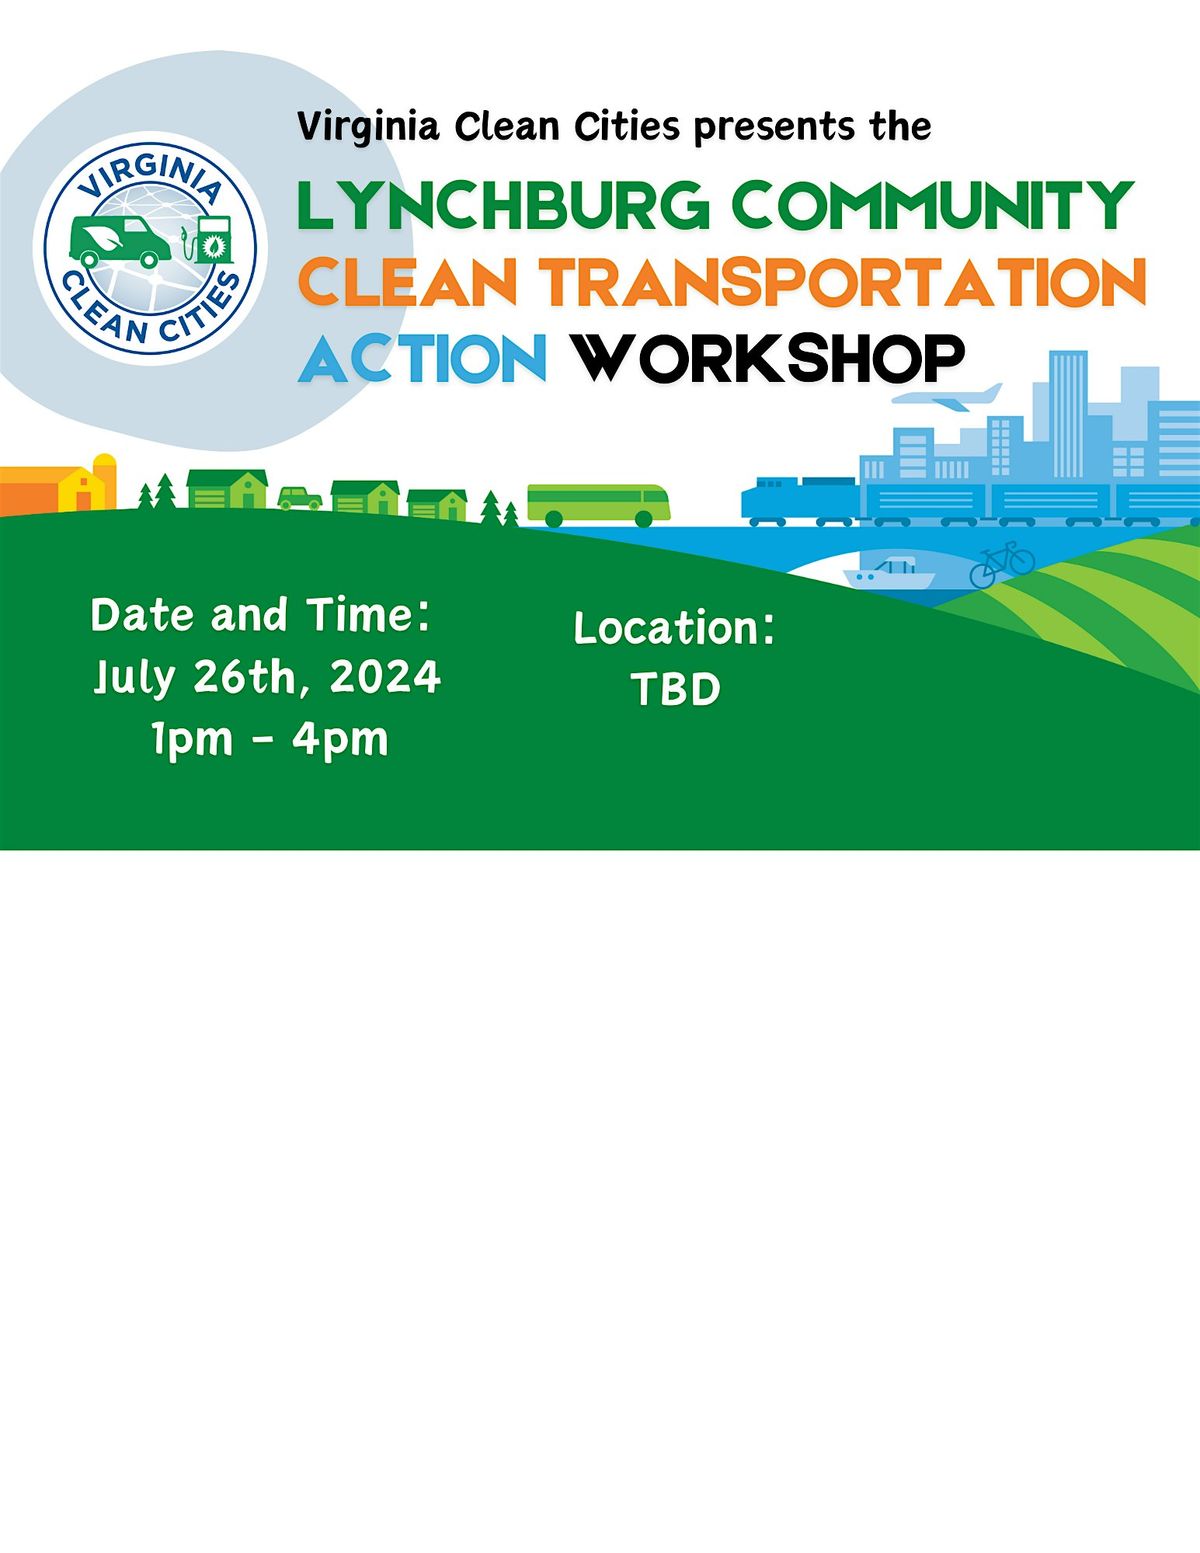 Lynchburg Community Clean Transportation Action Workshop